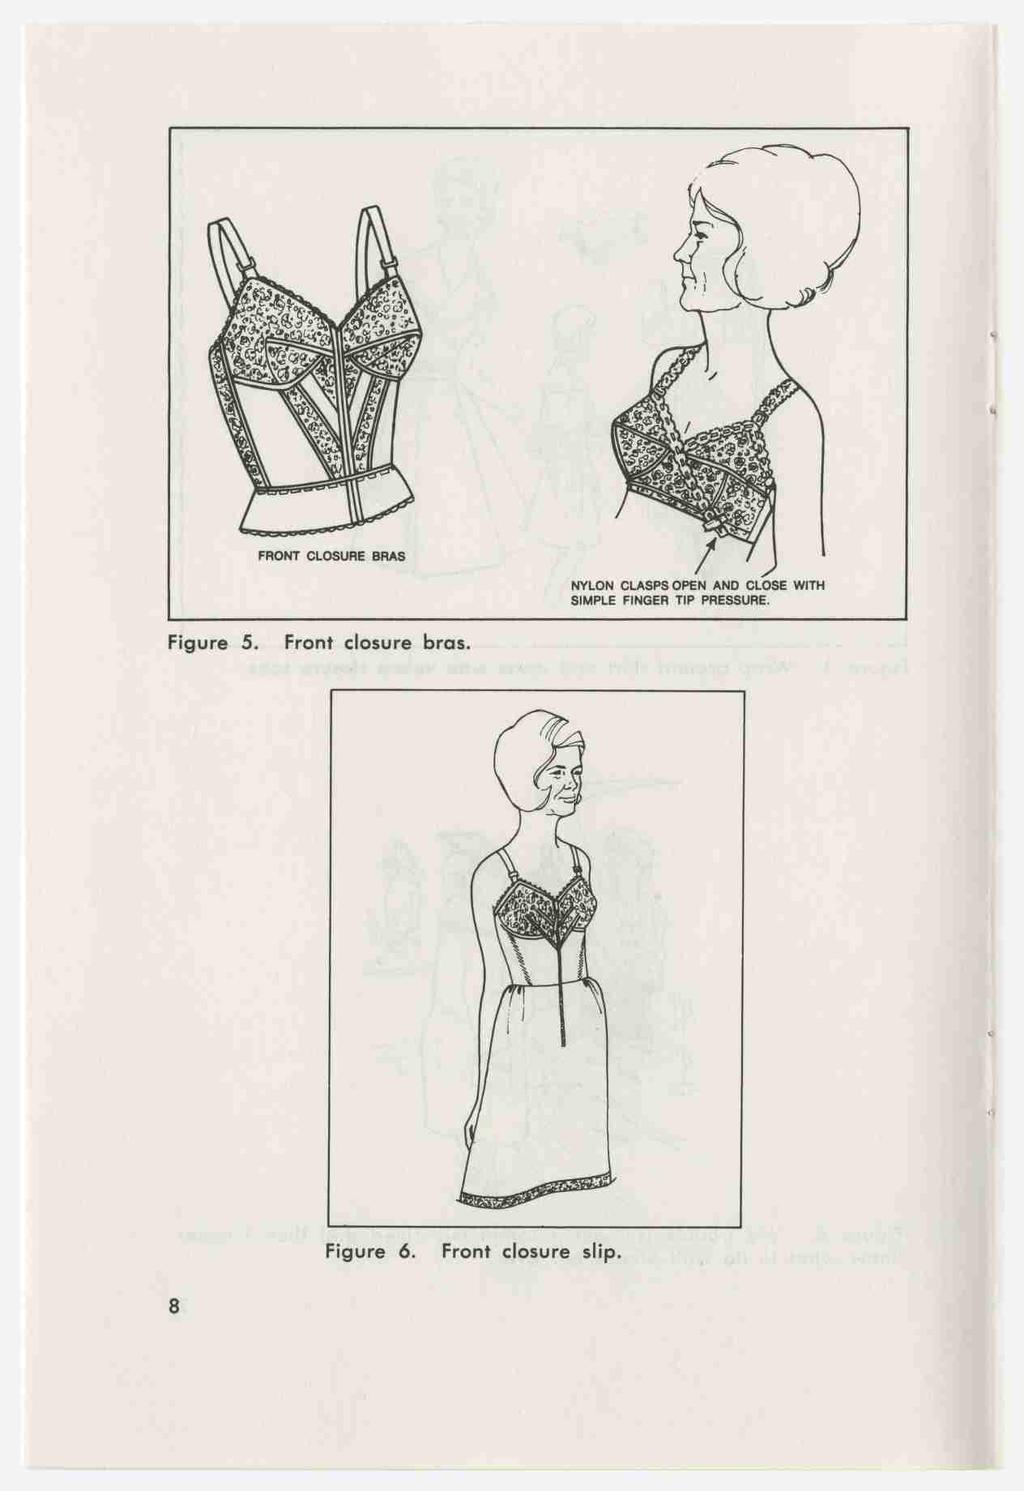 FRONT CLOSURE BRAS Figure 5. Front closure bras.